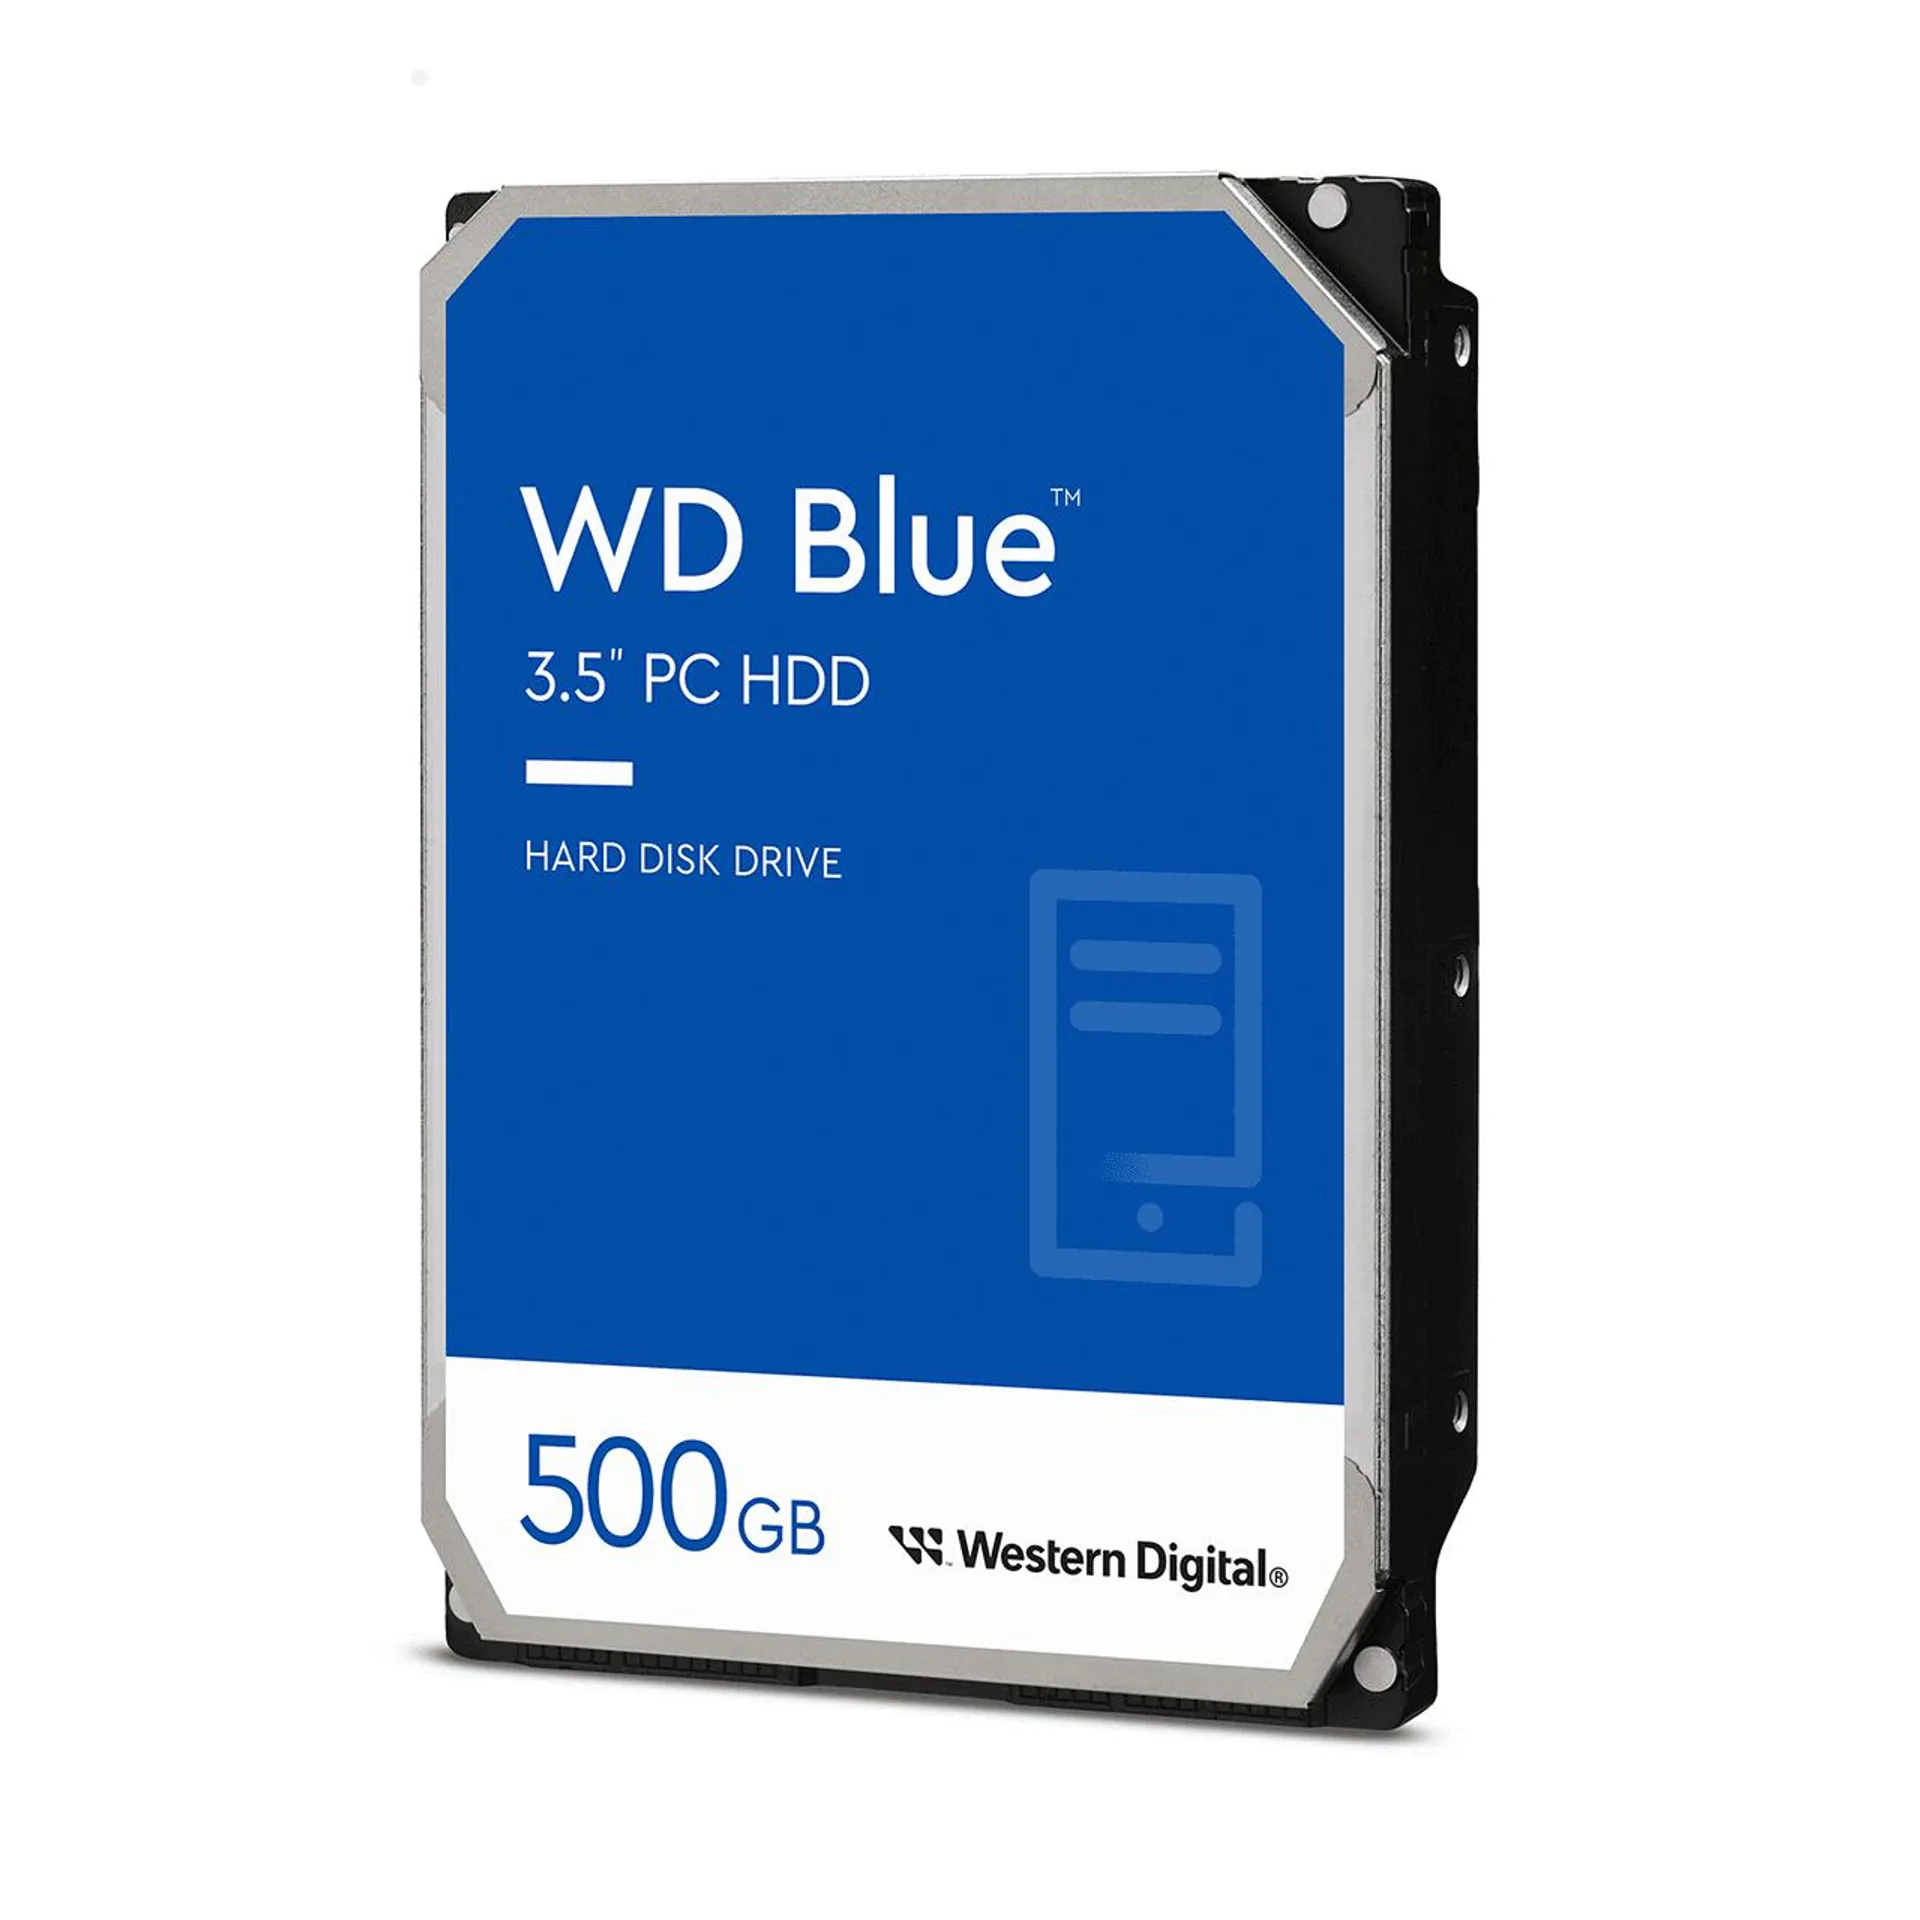 WD Blue PC Desktop Hard Drive